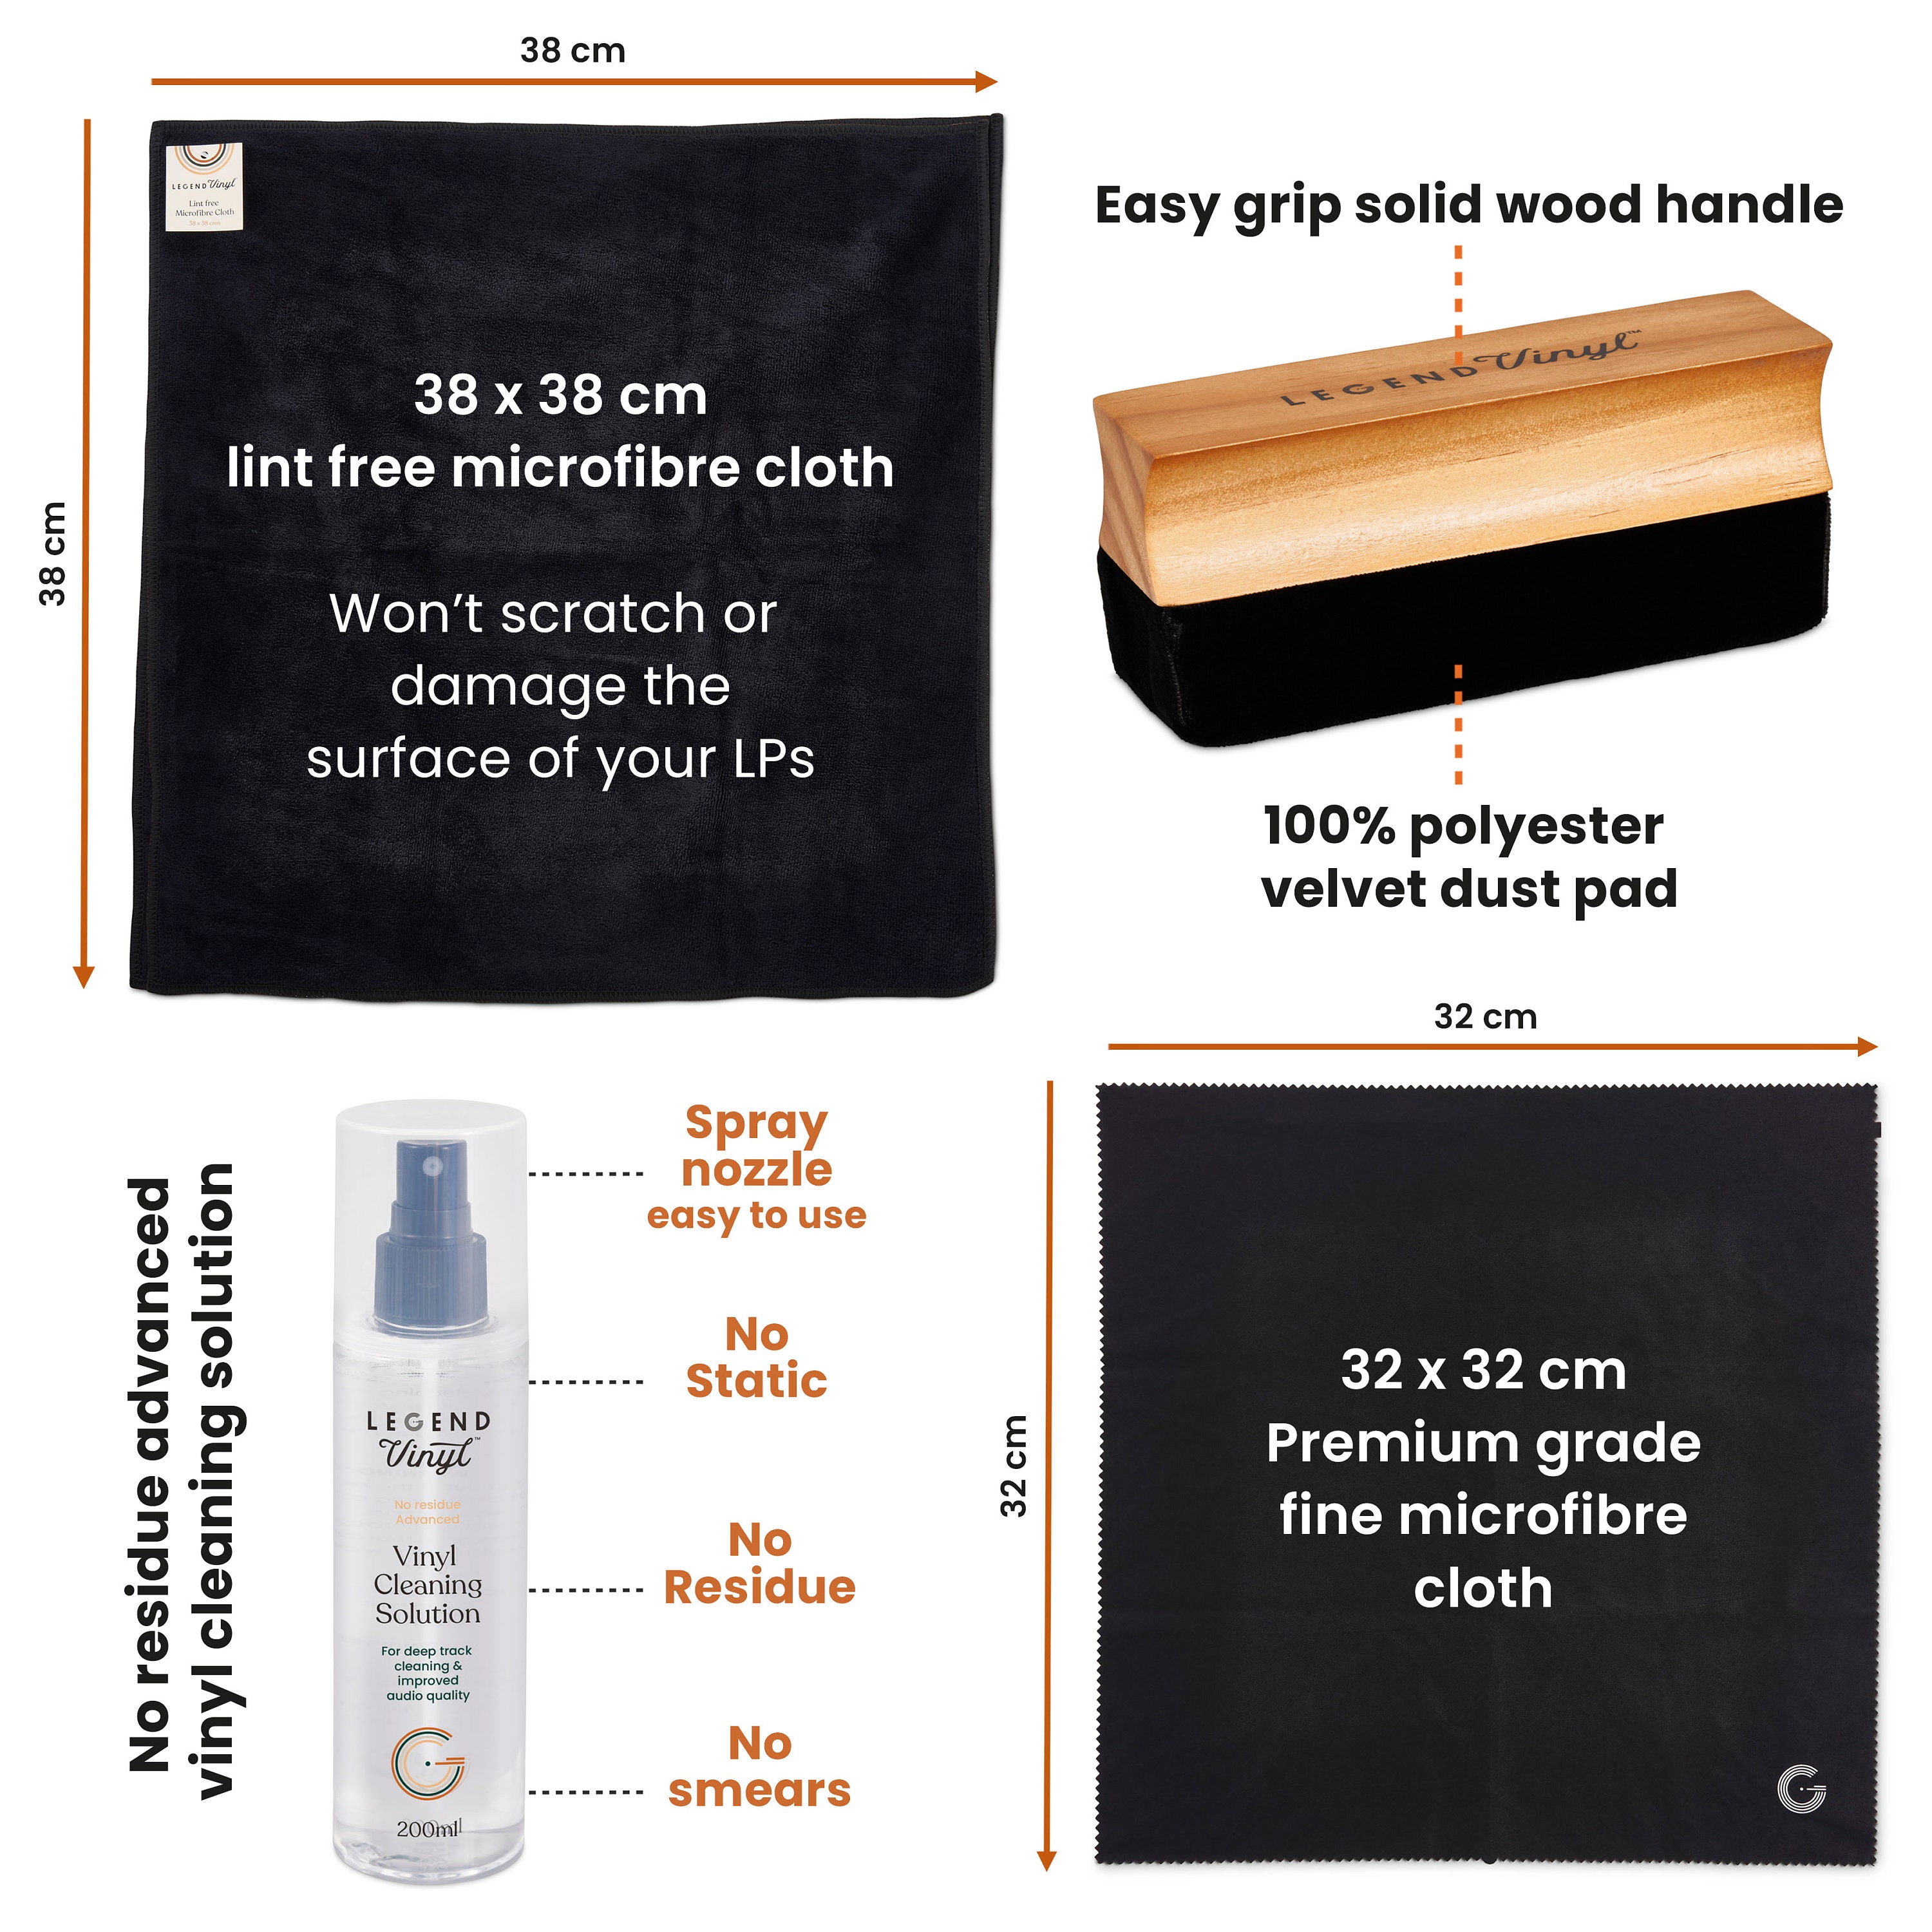 Complete Care Vinyl Record Cleaner Kit 2 Microfibre Cloths 200 Ml Fluid  Wooden Handle Velvet Brush Stylus Brush and Solution 